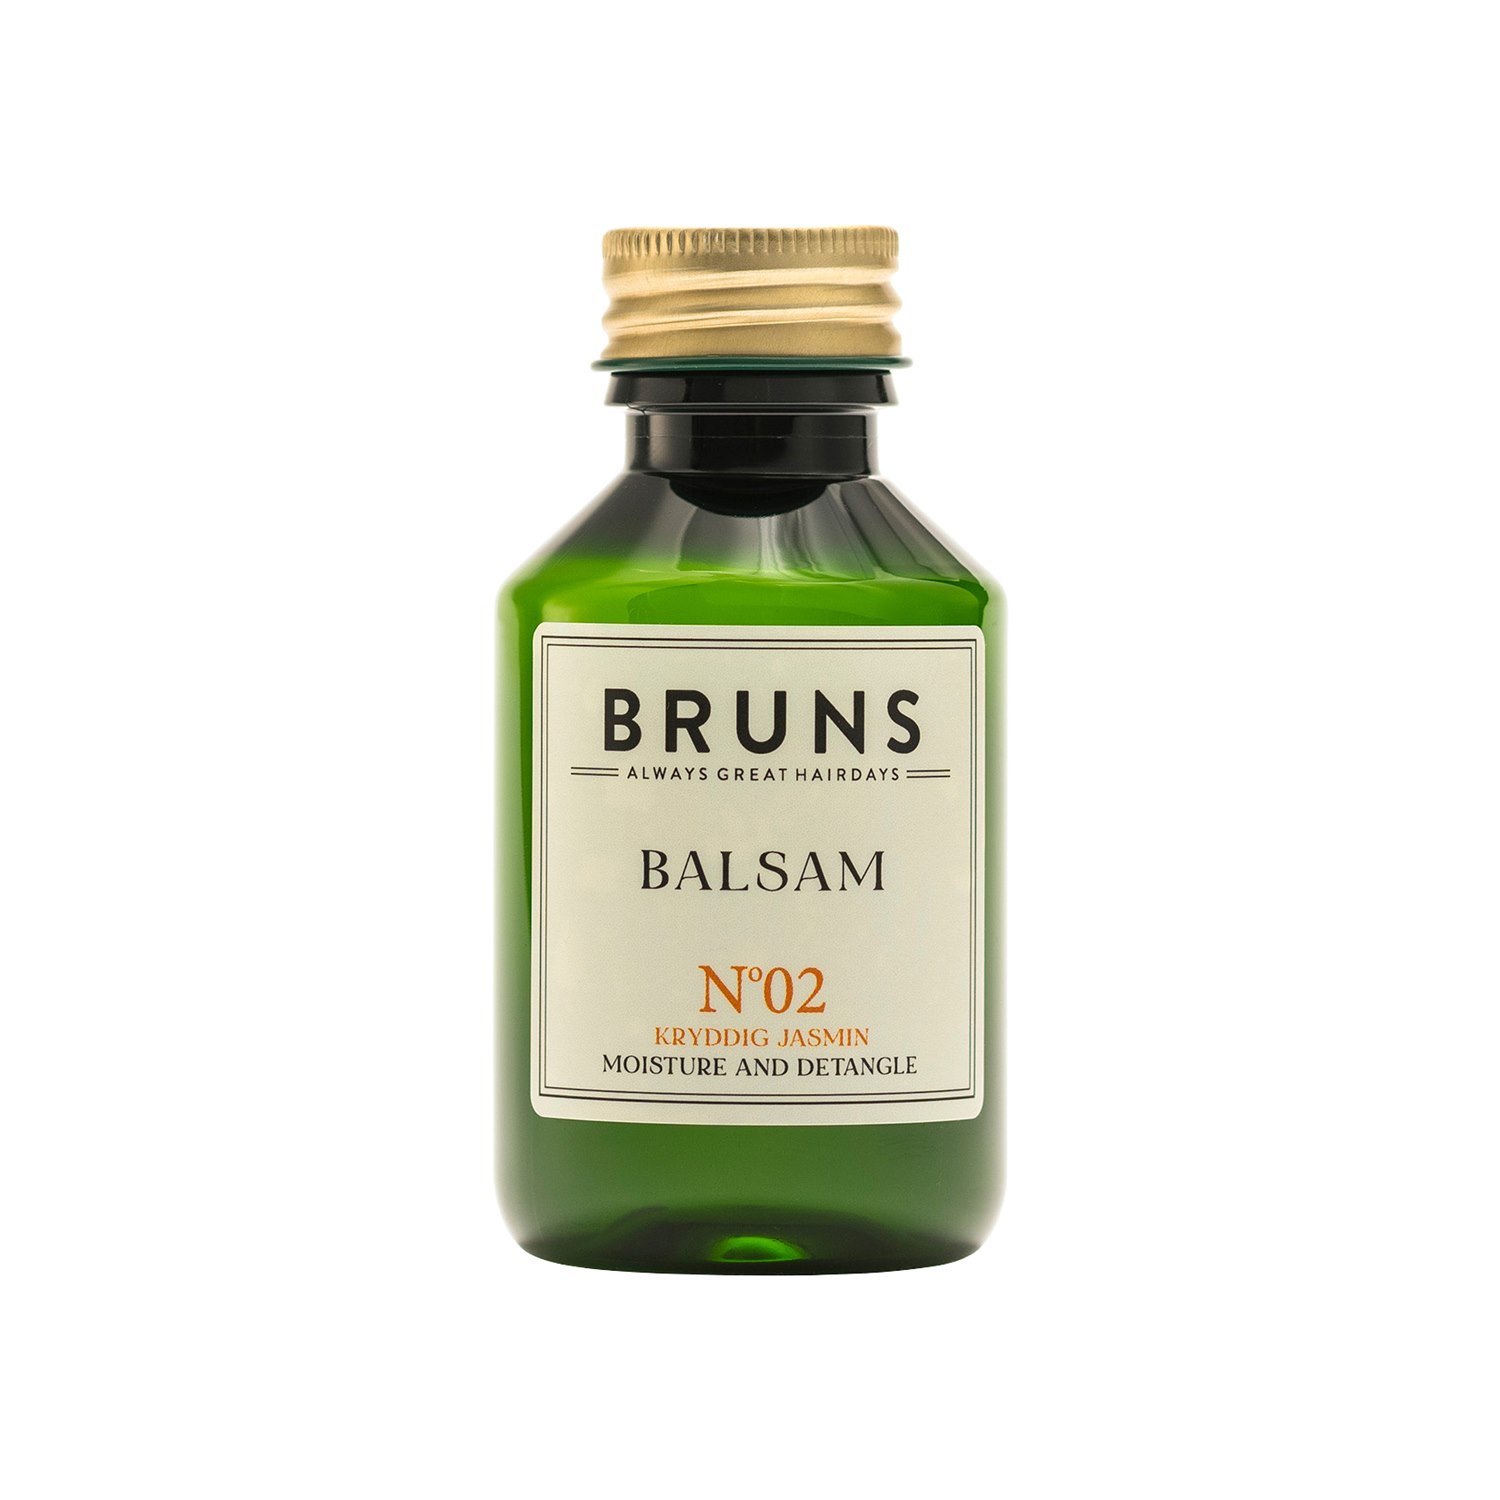 BRUNS Products Balsam nr 02 - Kryddig Jasmin 100 ml